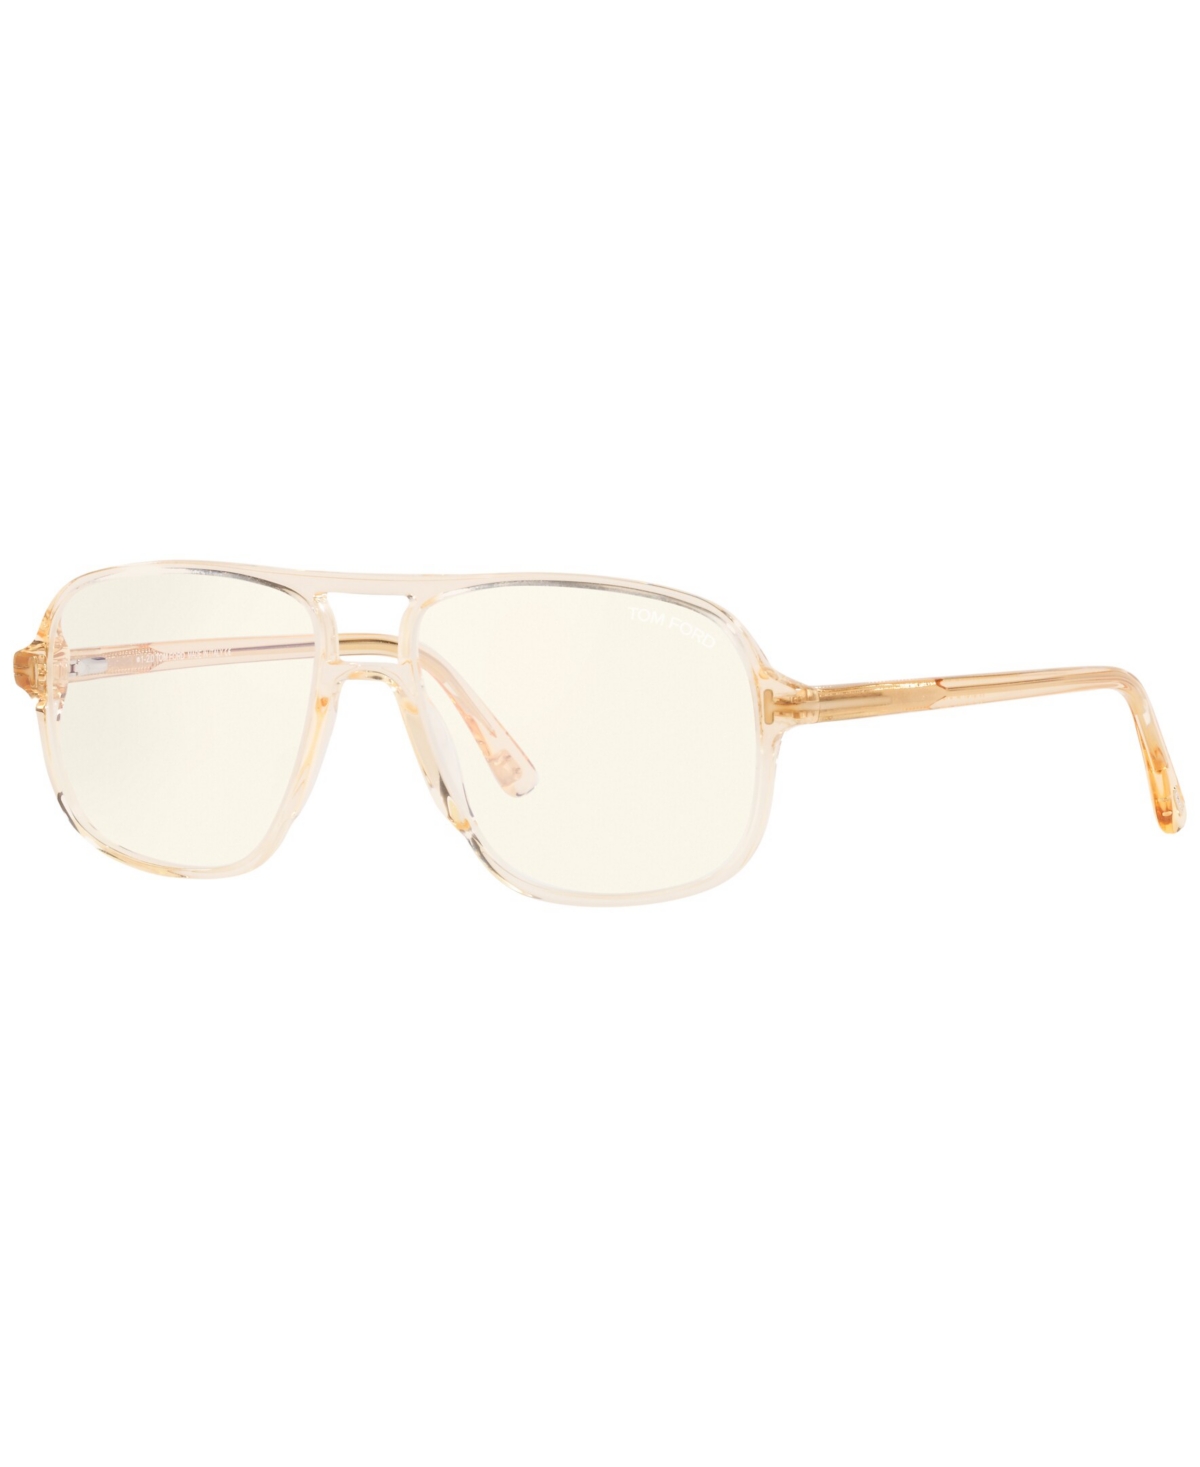 Men's Square Eyeglasses TR001317 - Brown Shiny